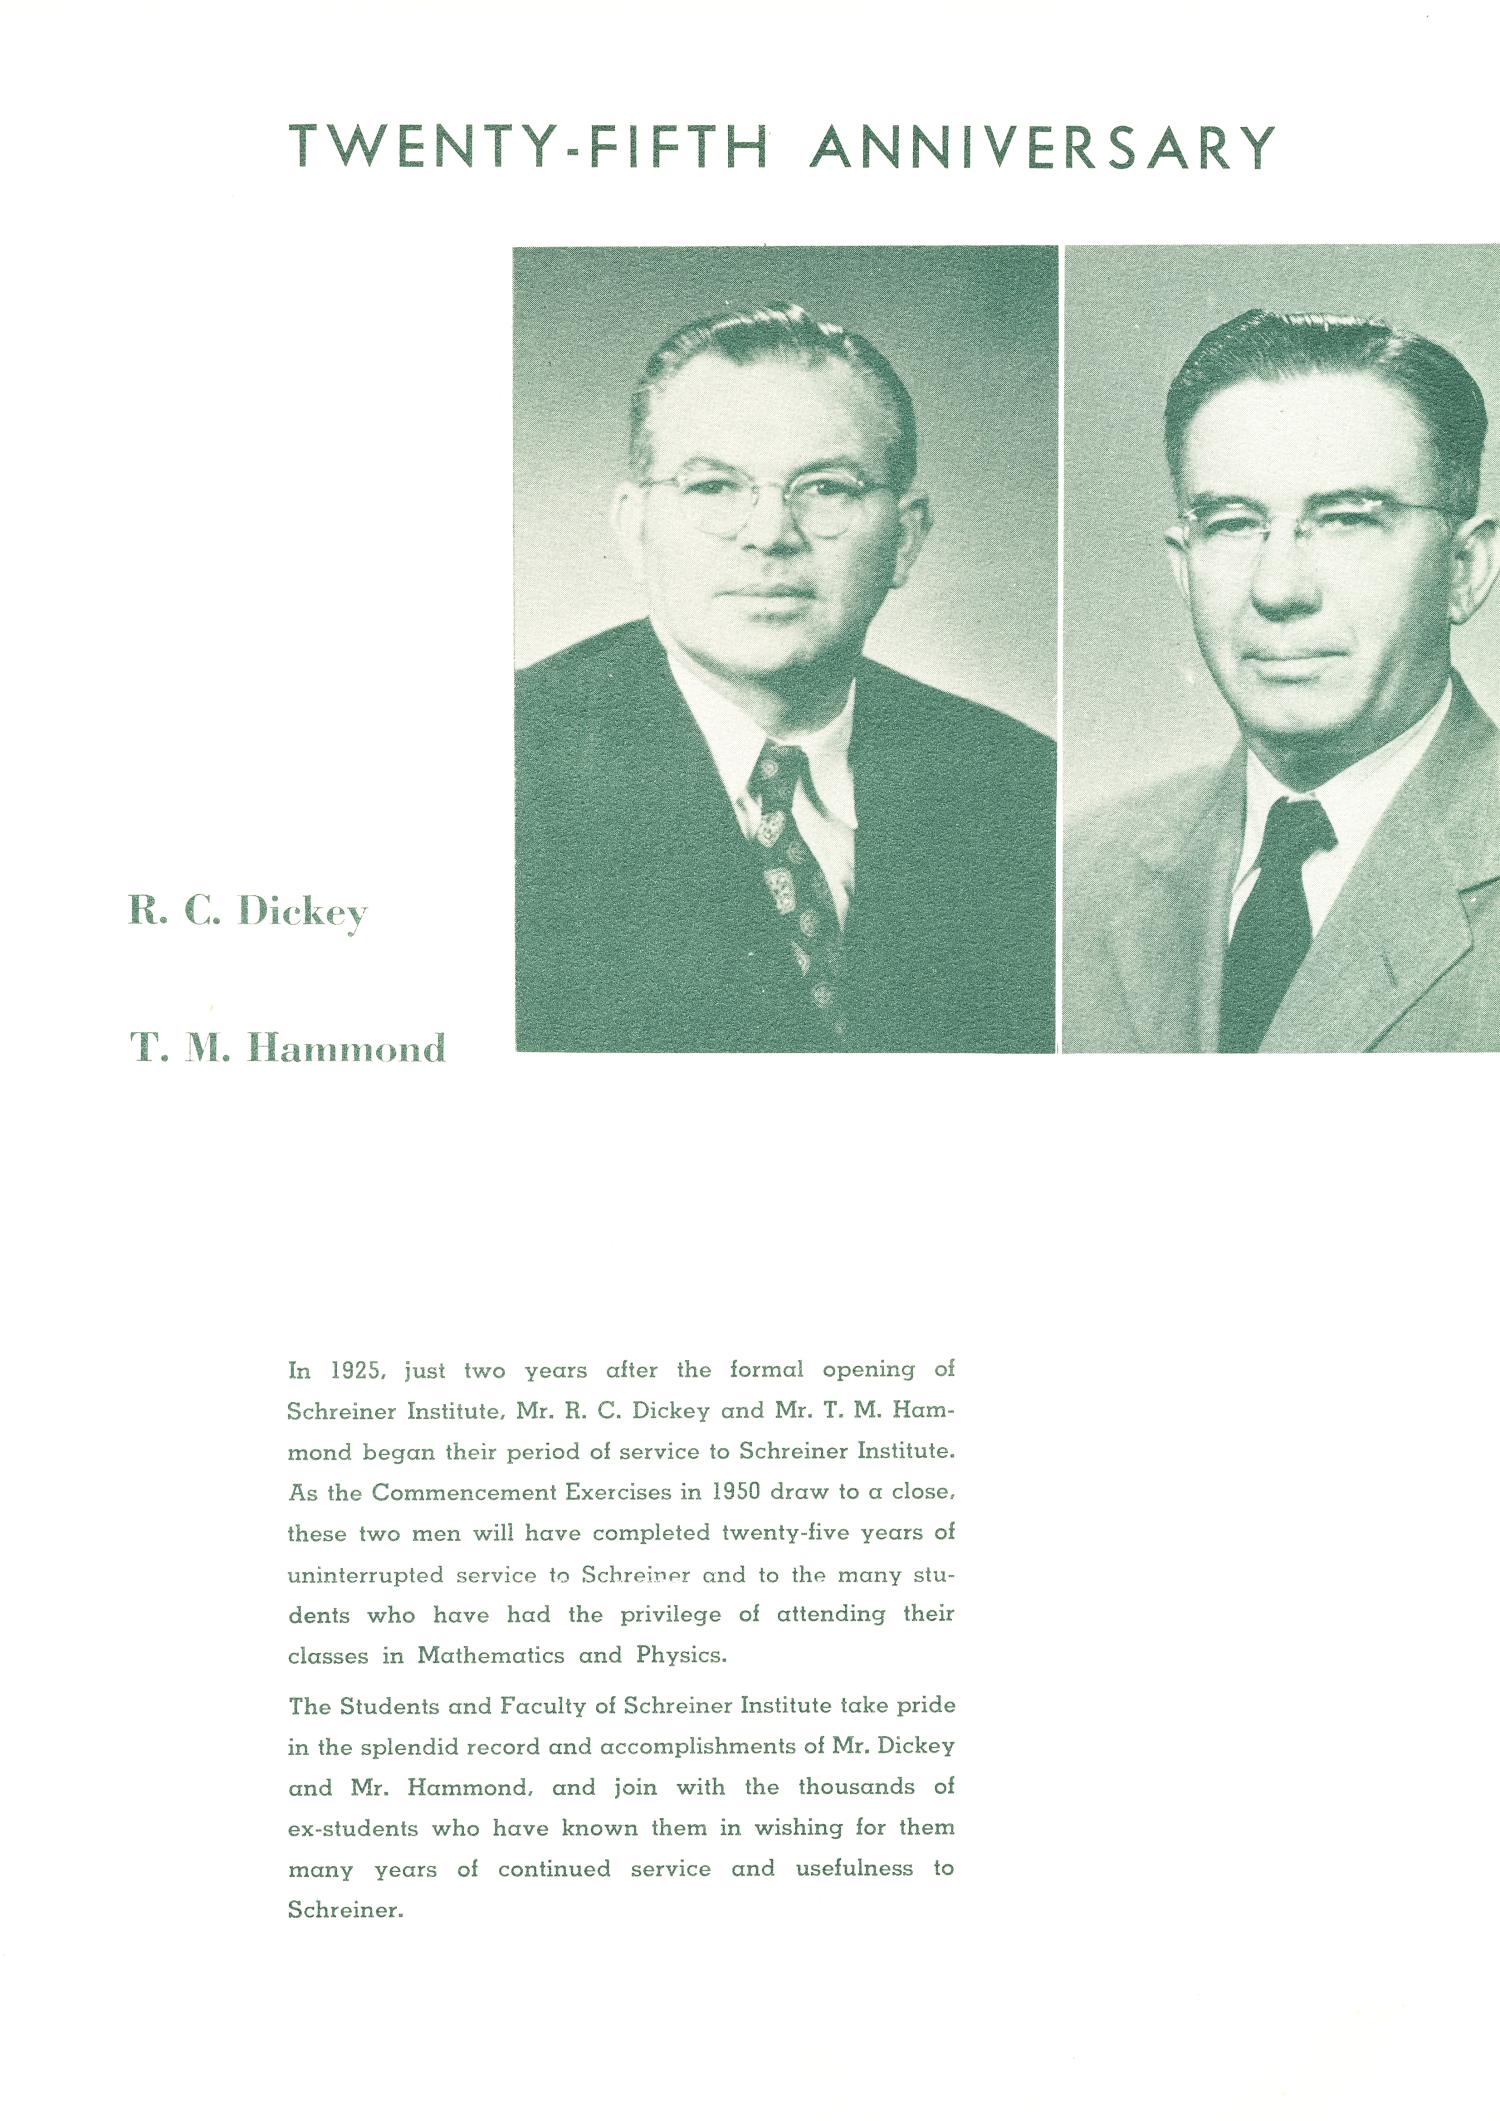 The Recall, Yearbook of Schreiner Institute, 1950
                                                
                                                    9
                                                